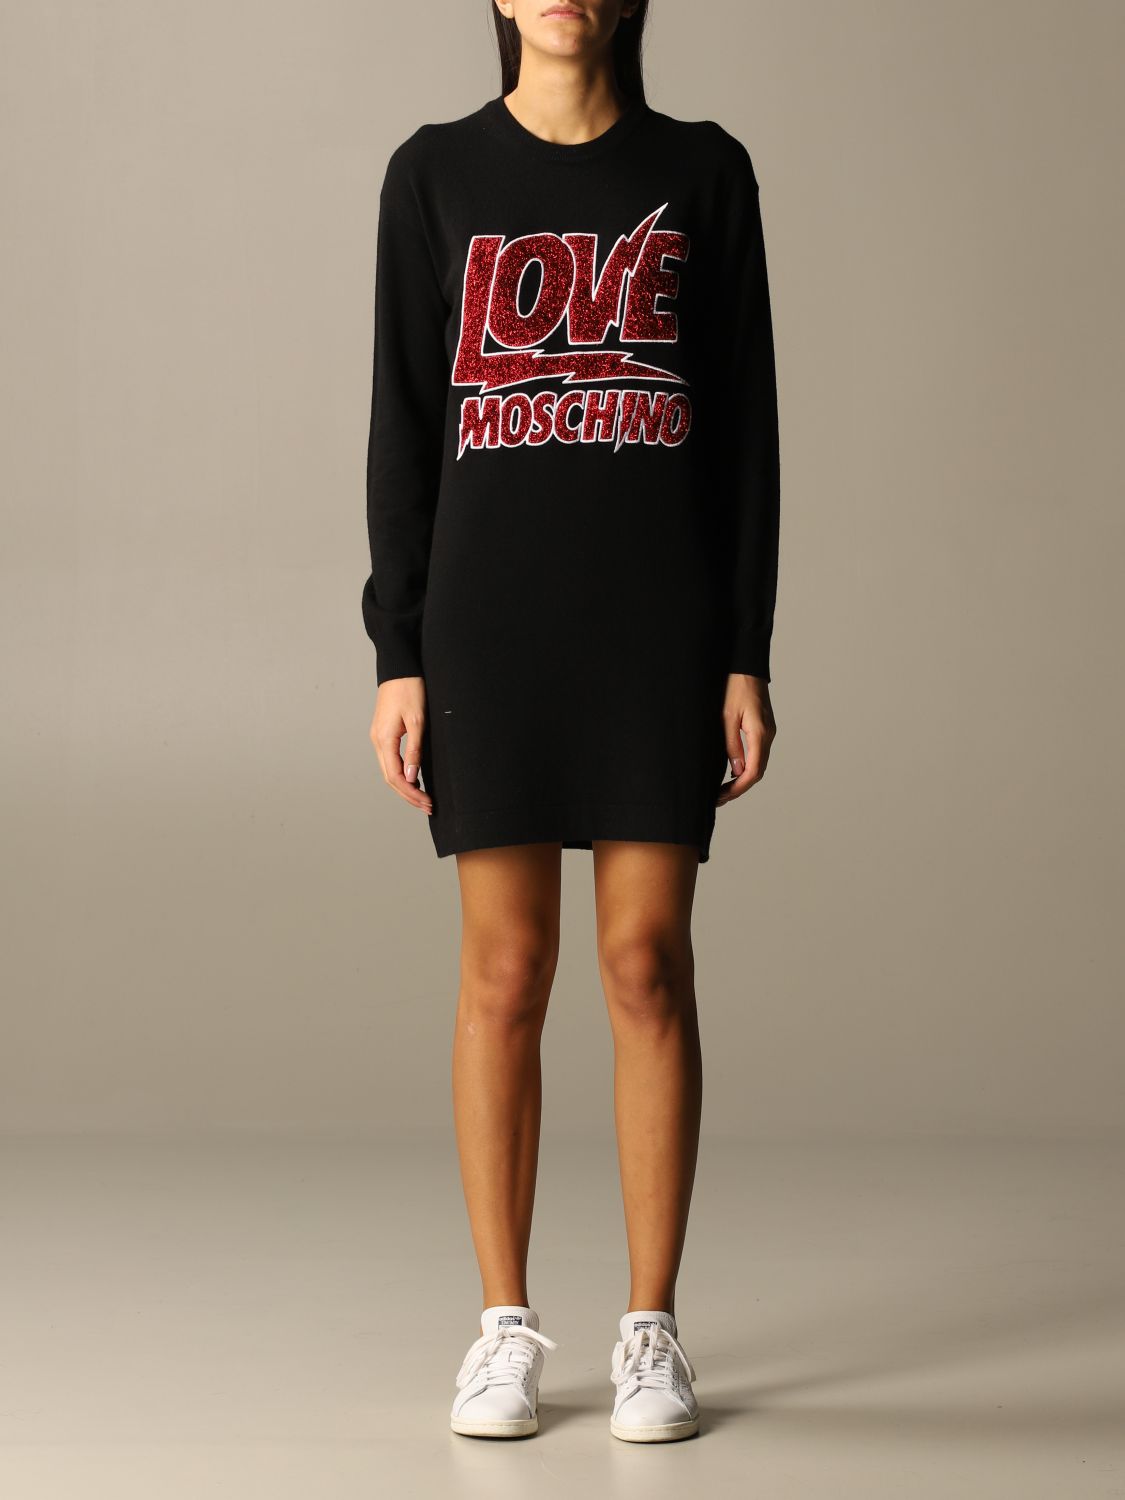 Dress women Love Moschino | Dress Love Moschino Women Black | Dress